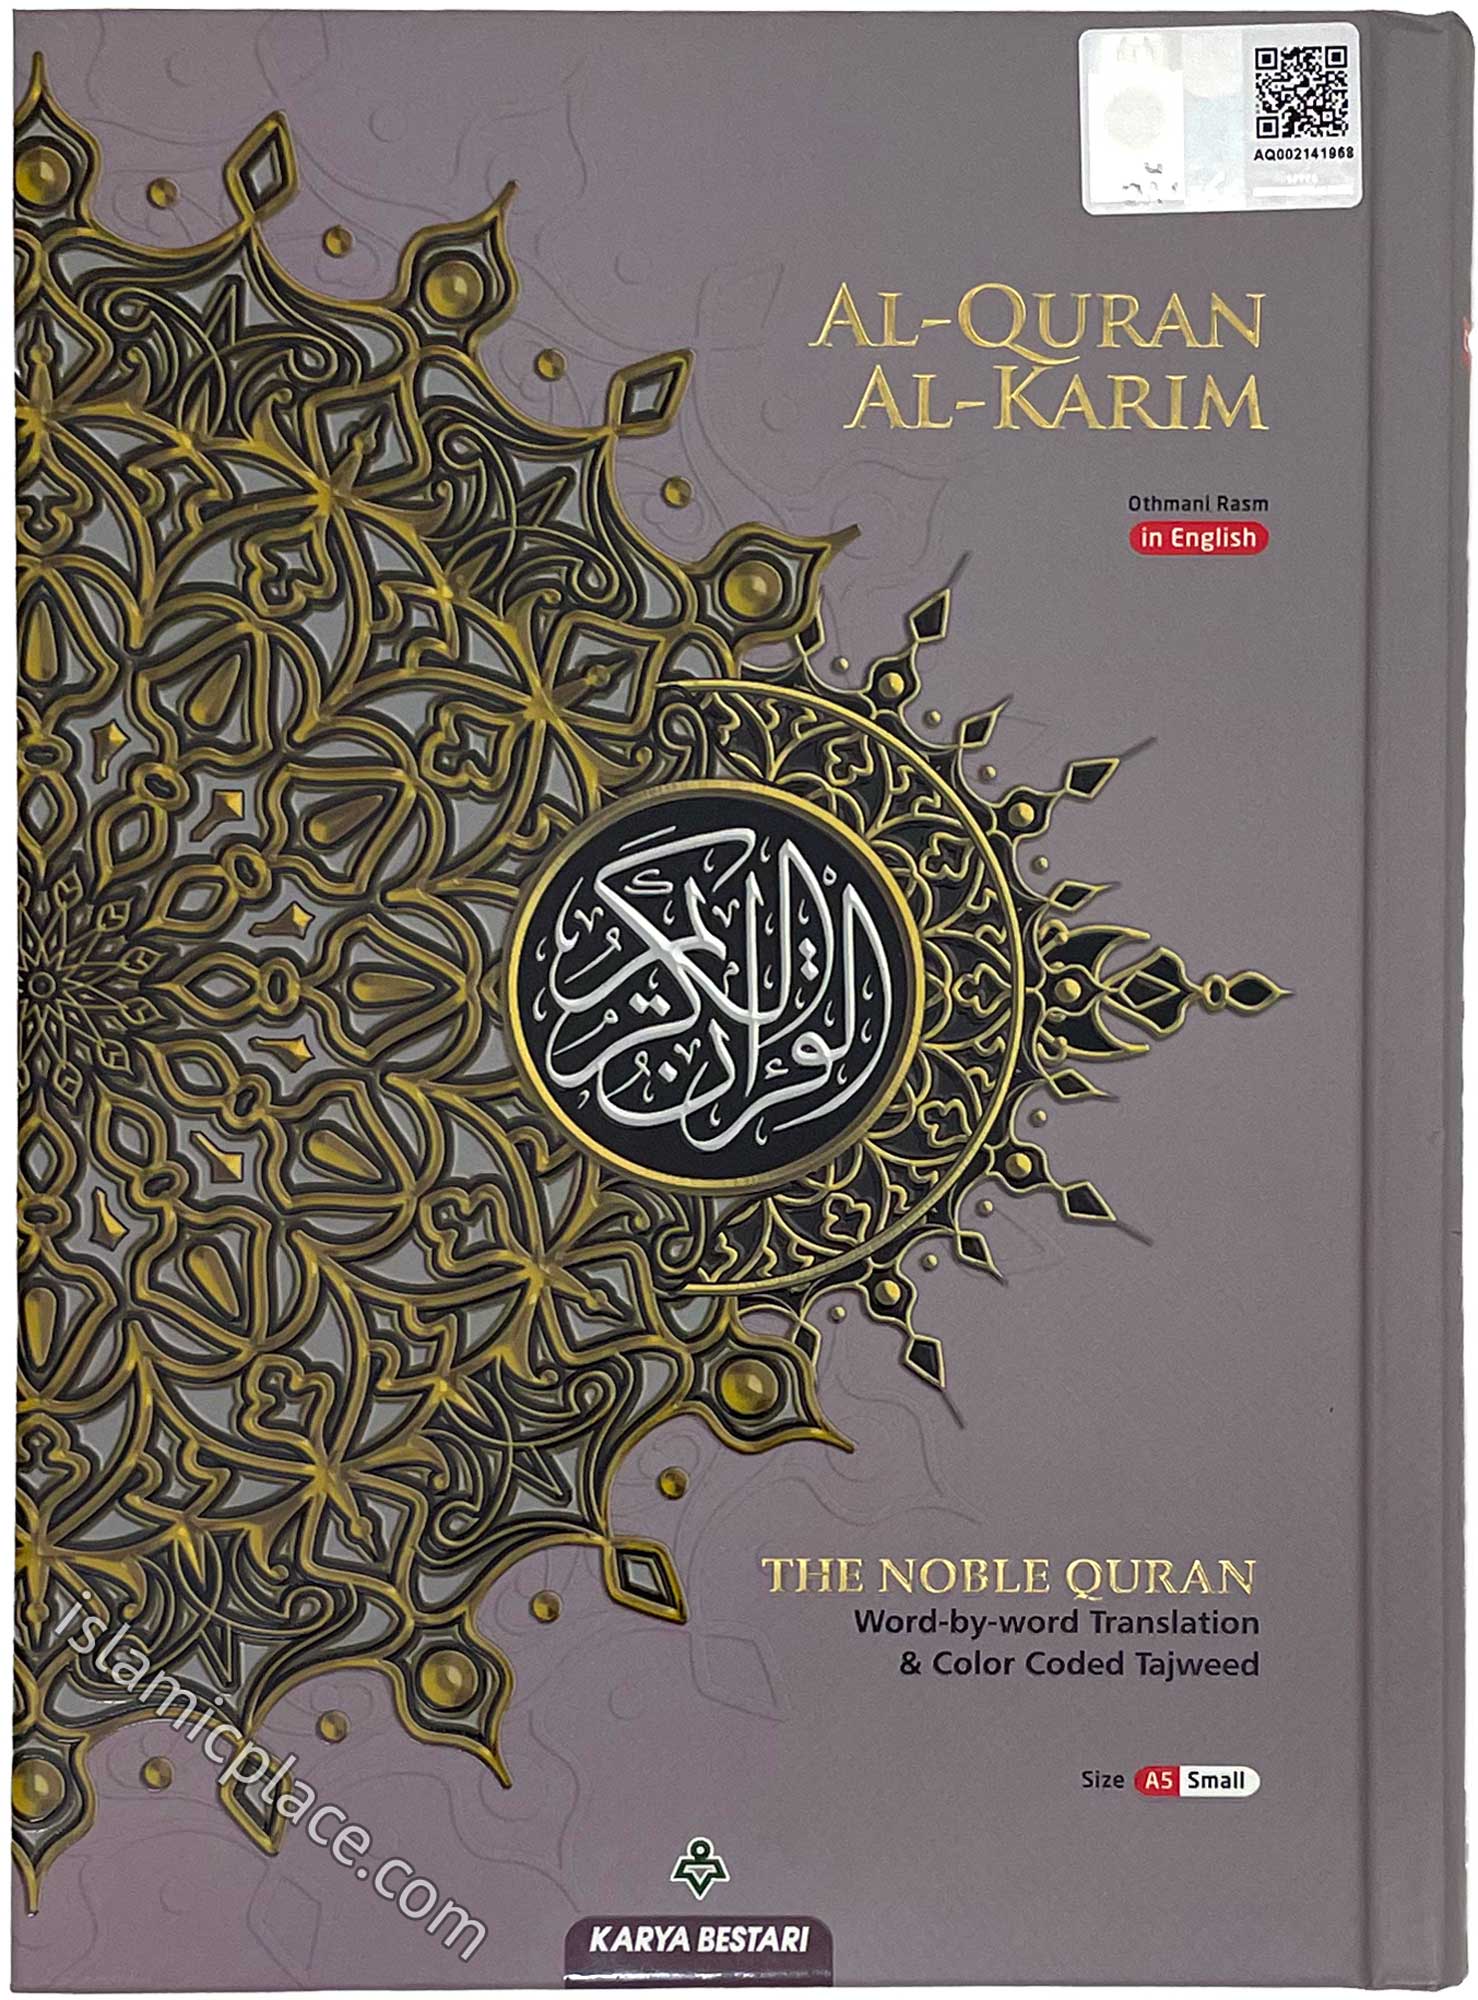 Al-Quran Al-Karim - The Noble Quran Word-by-Word Translation & Color Coded Tajweed Small 6" x 8.5"